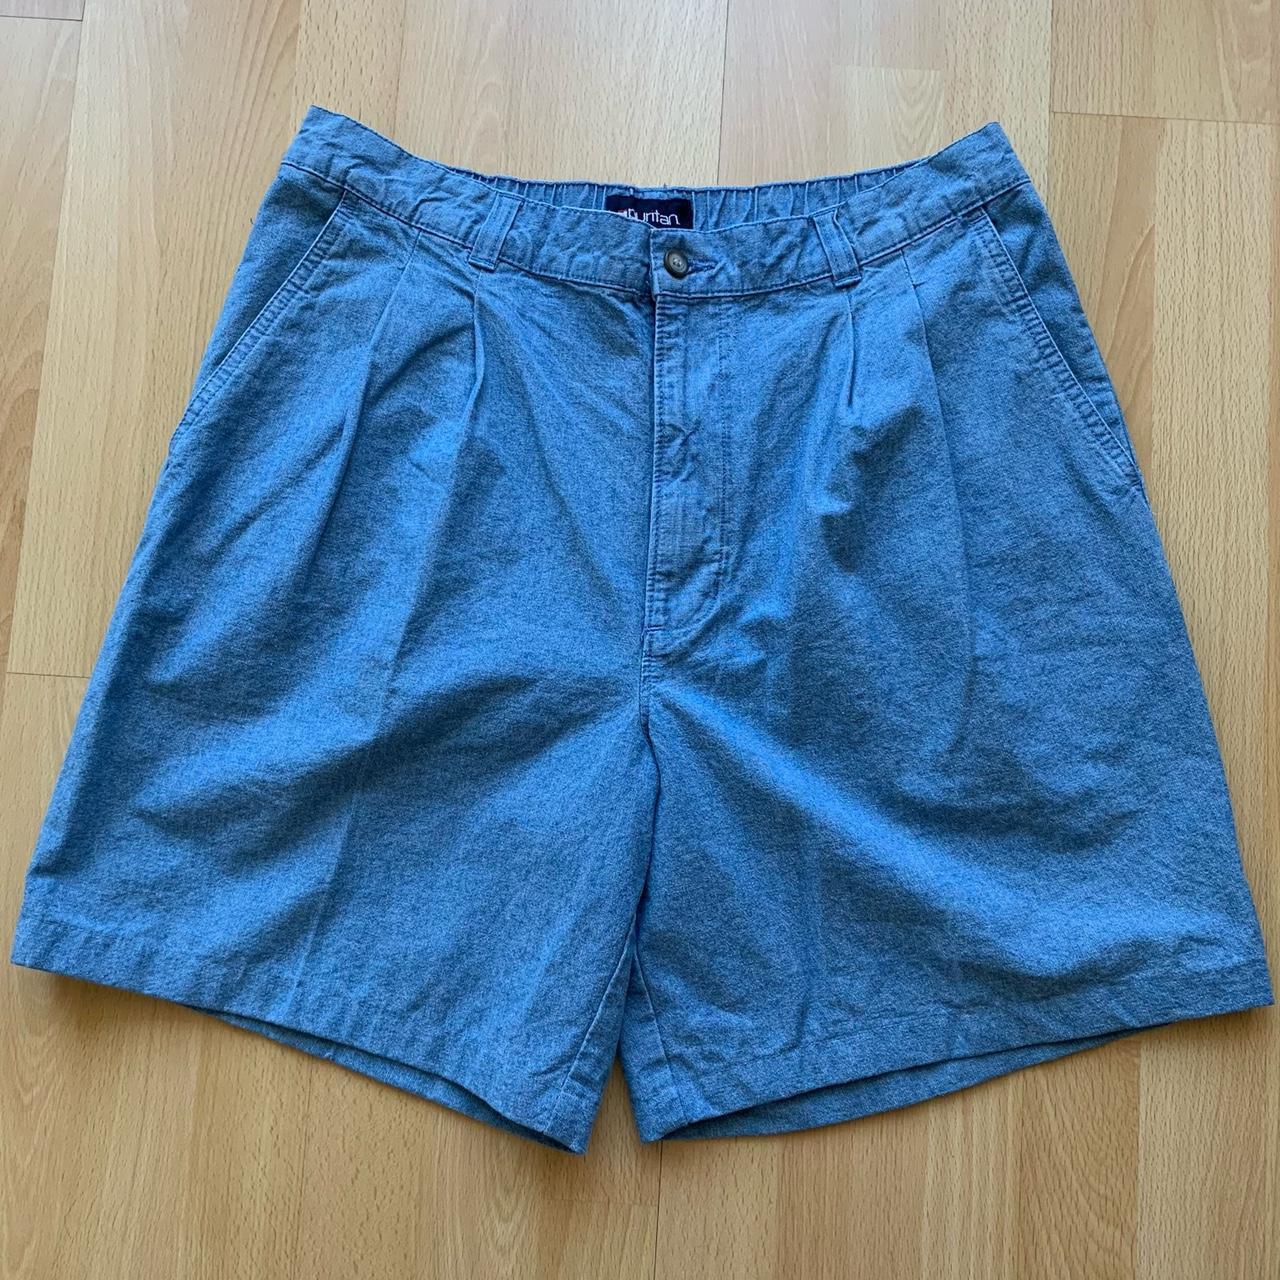 Men Denim Shorts Men Shorts Casual Shorts Knee Length Jeans Midi Pants  Short Pants Short Jeans (Dark Blue, 28 inch) at Amazon Men's Clothing store